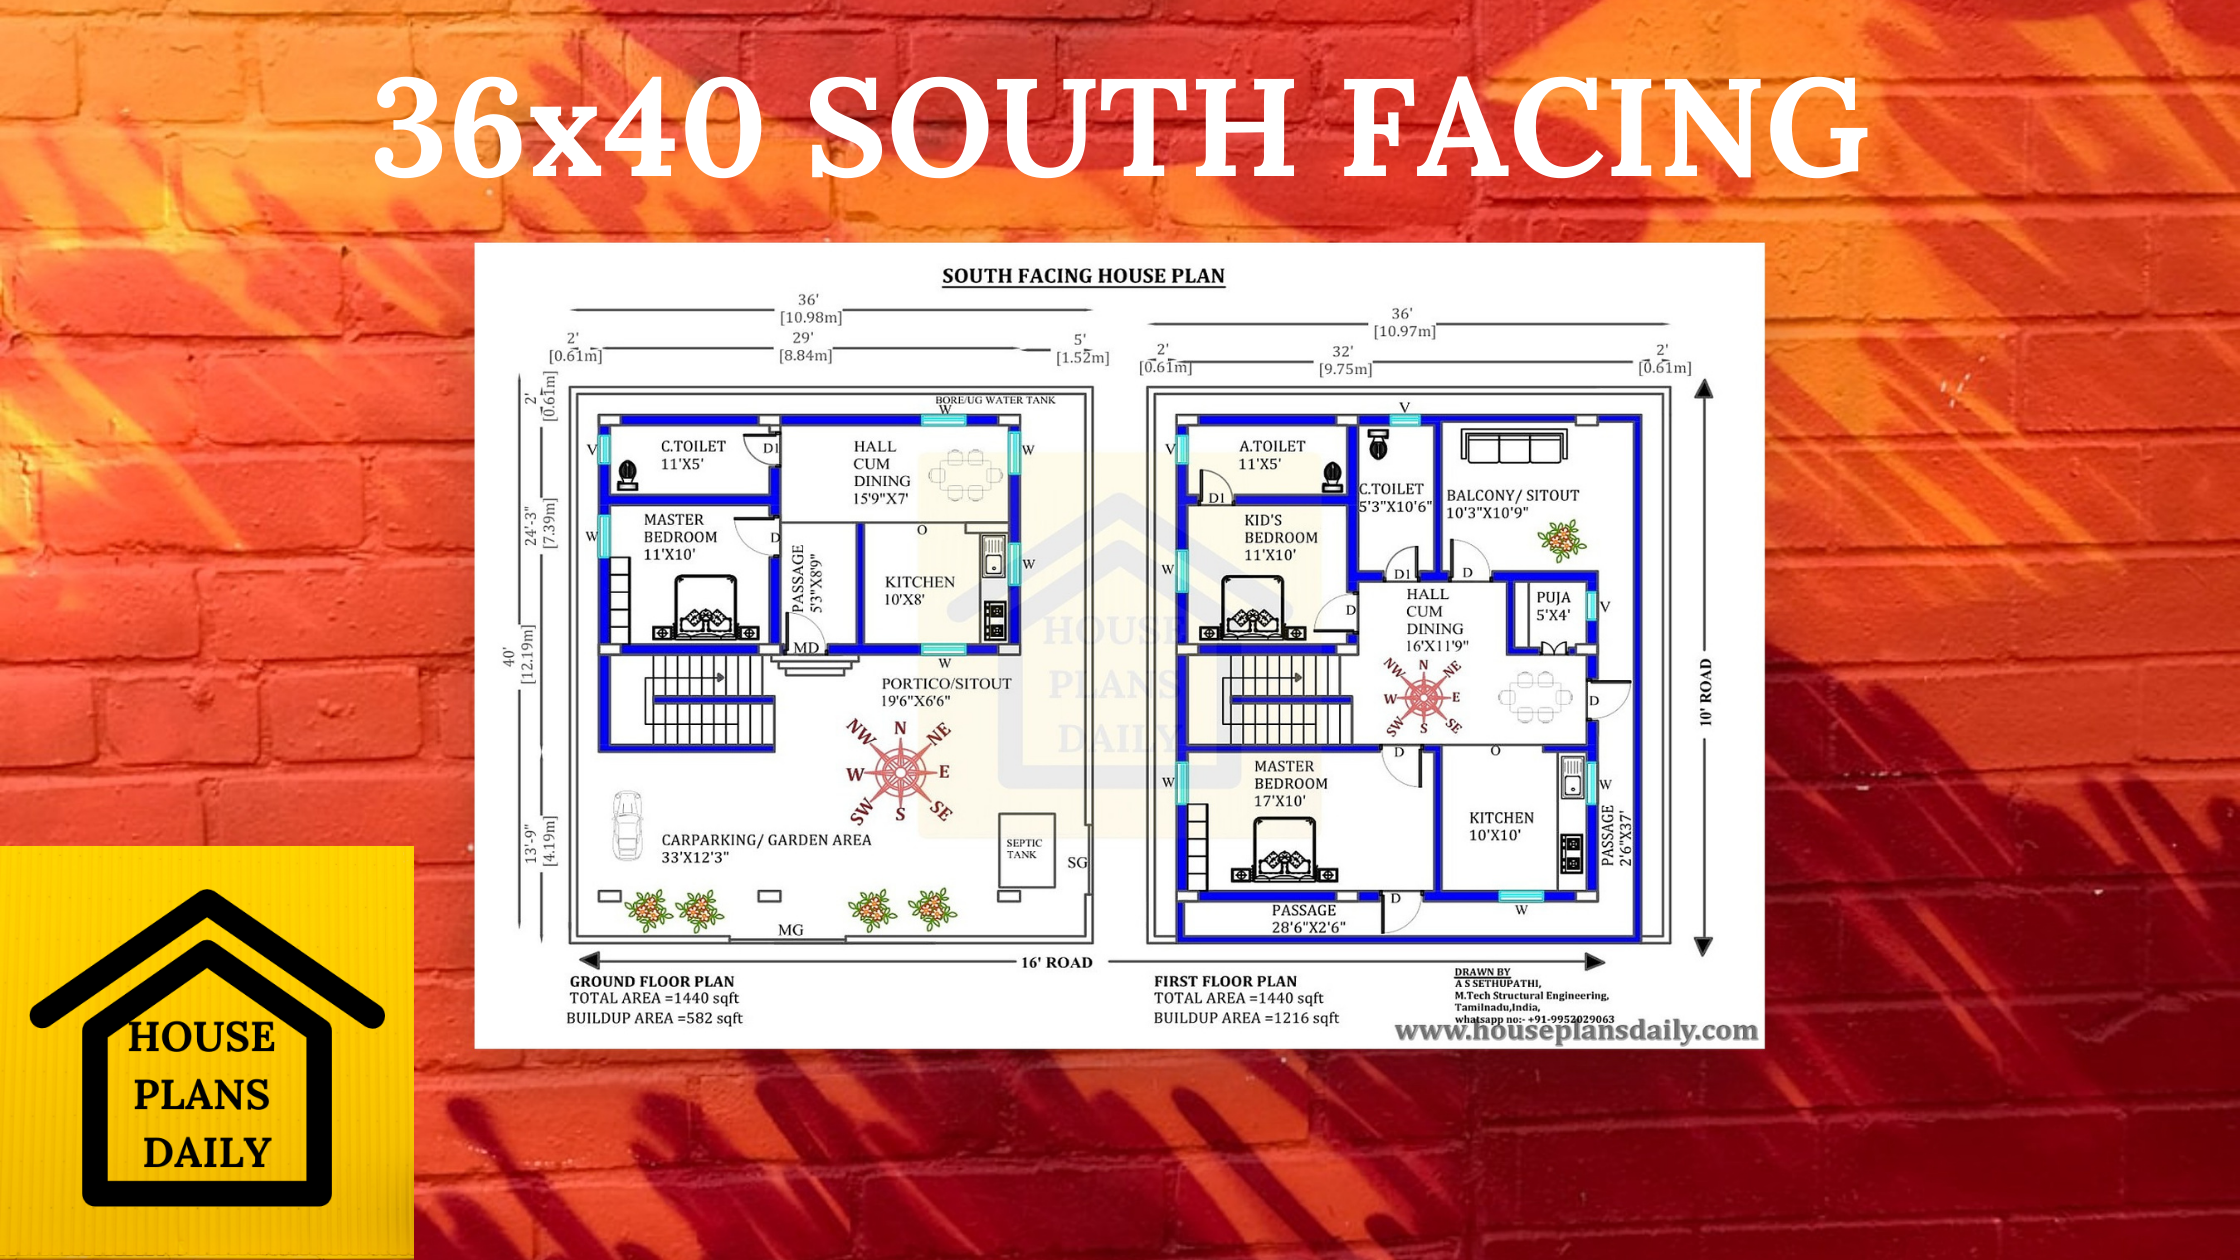 36x40 South Facing House Plan According to Vastu